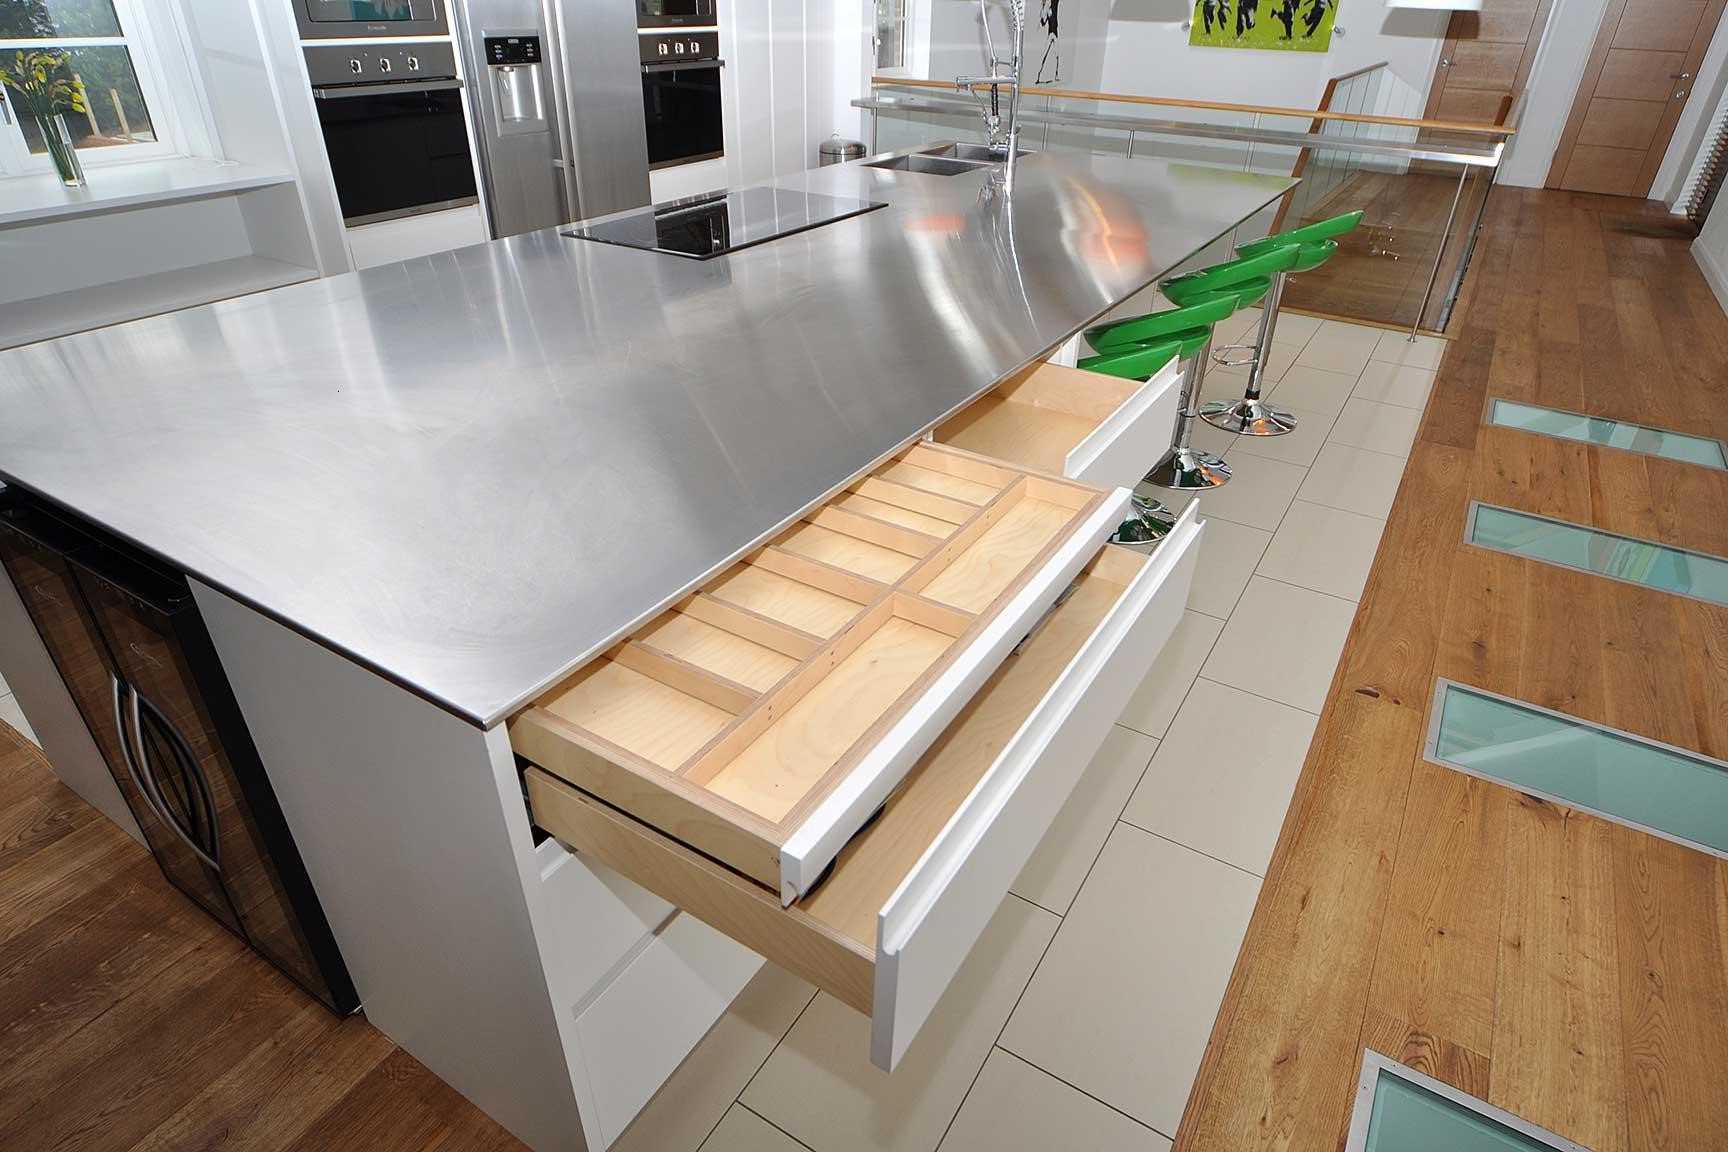 Bent over kitchen counter